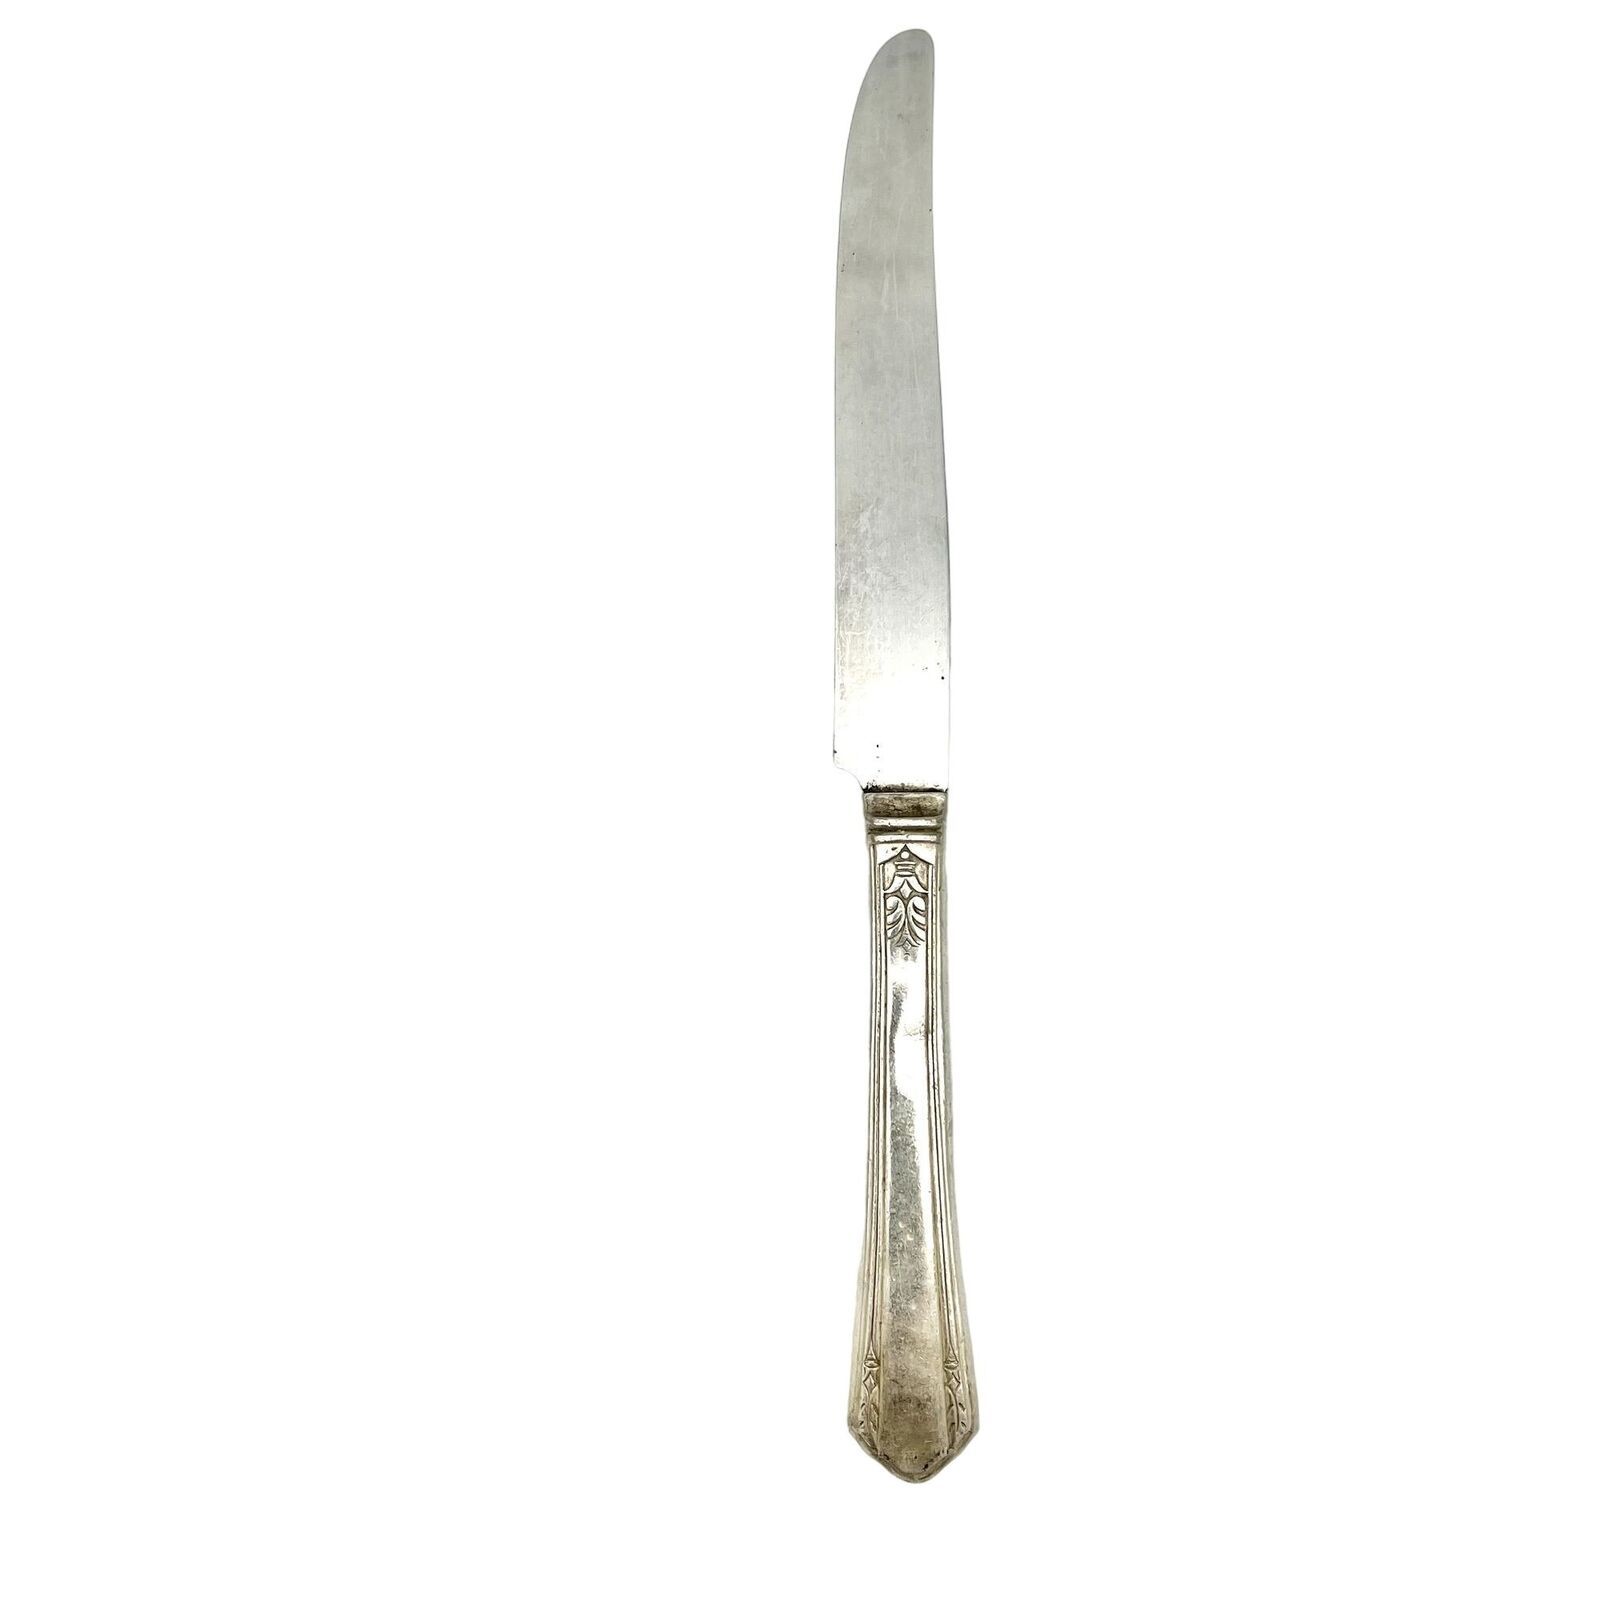 Vintage Wm A Rogers Dinner Knife Stainless Steel - $4.95